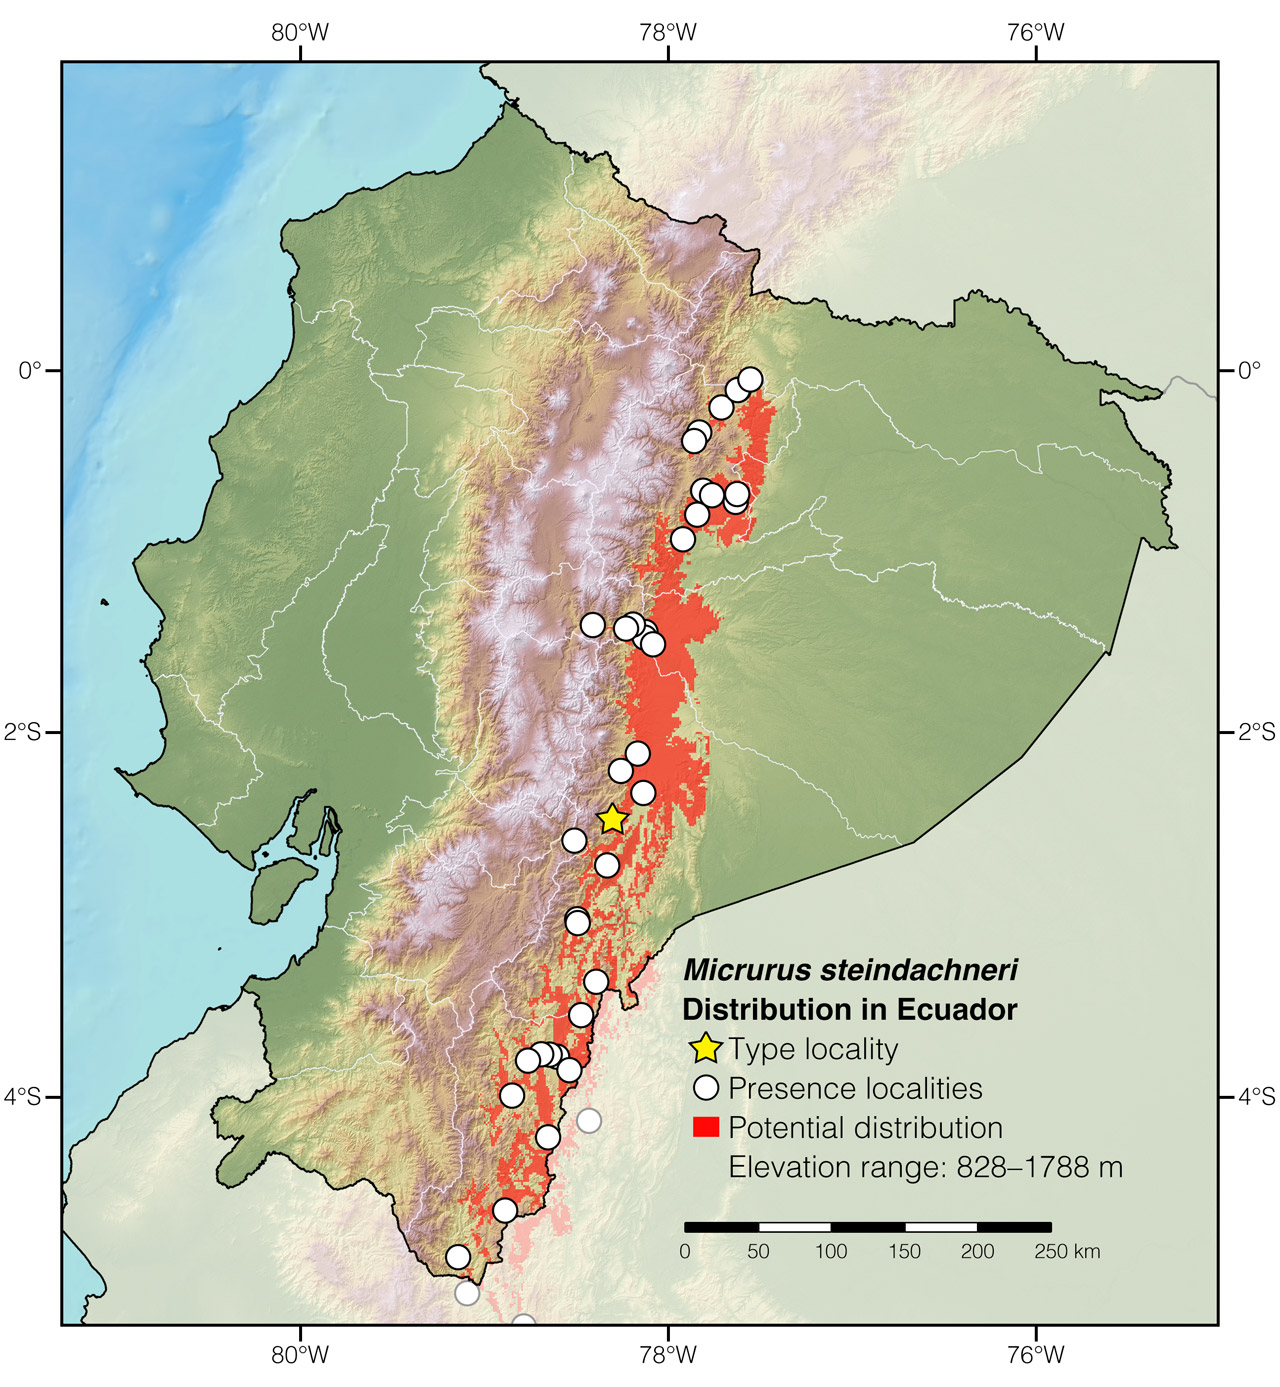 Distribution of Micrurus steindachneri in Ecuador